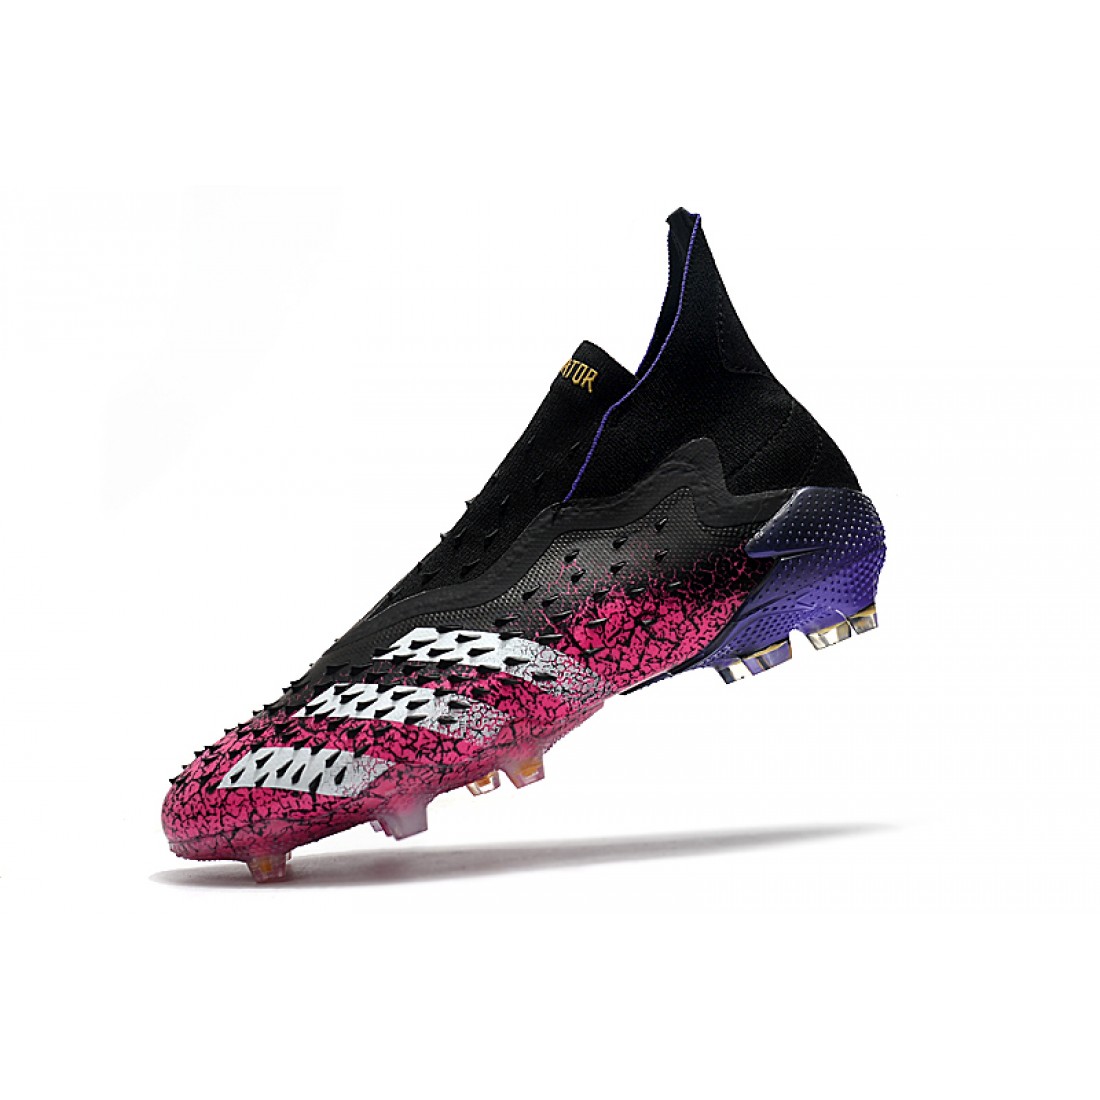 New Adidas Predator Freak FG Soccer Cleats Pink Black